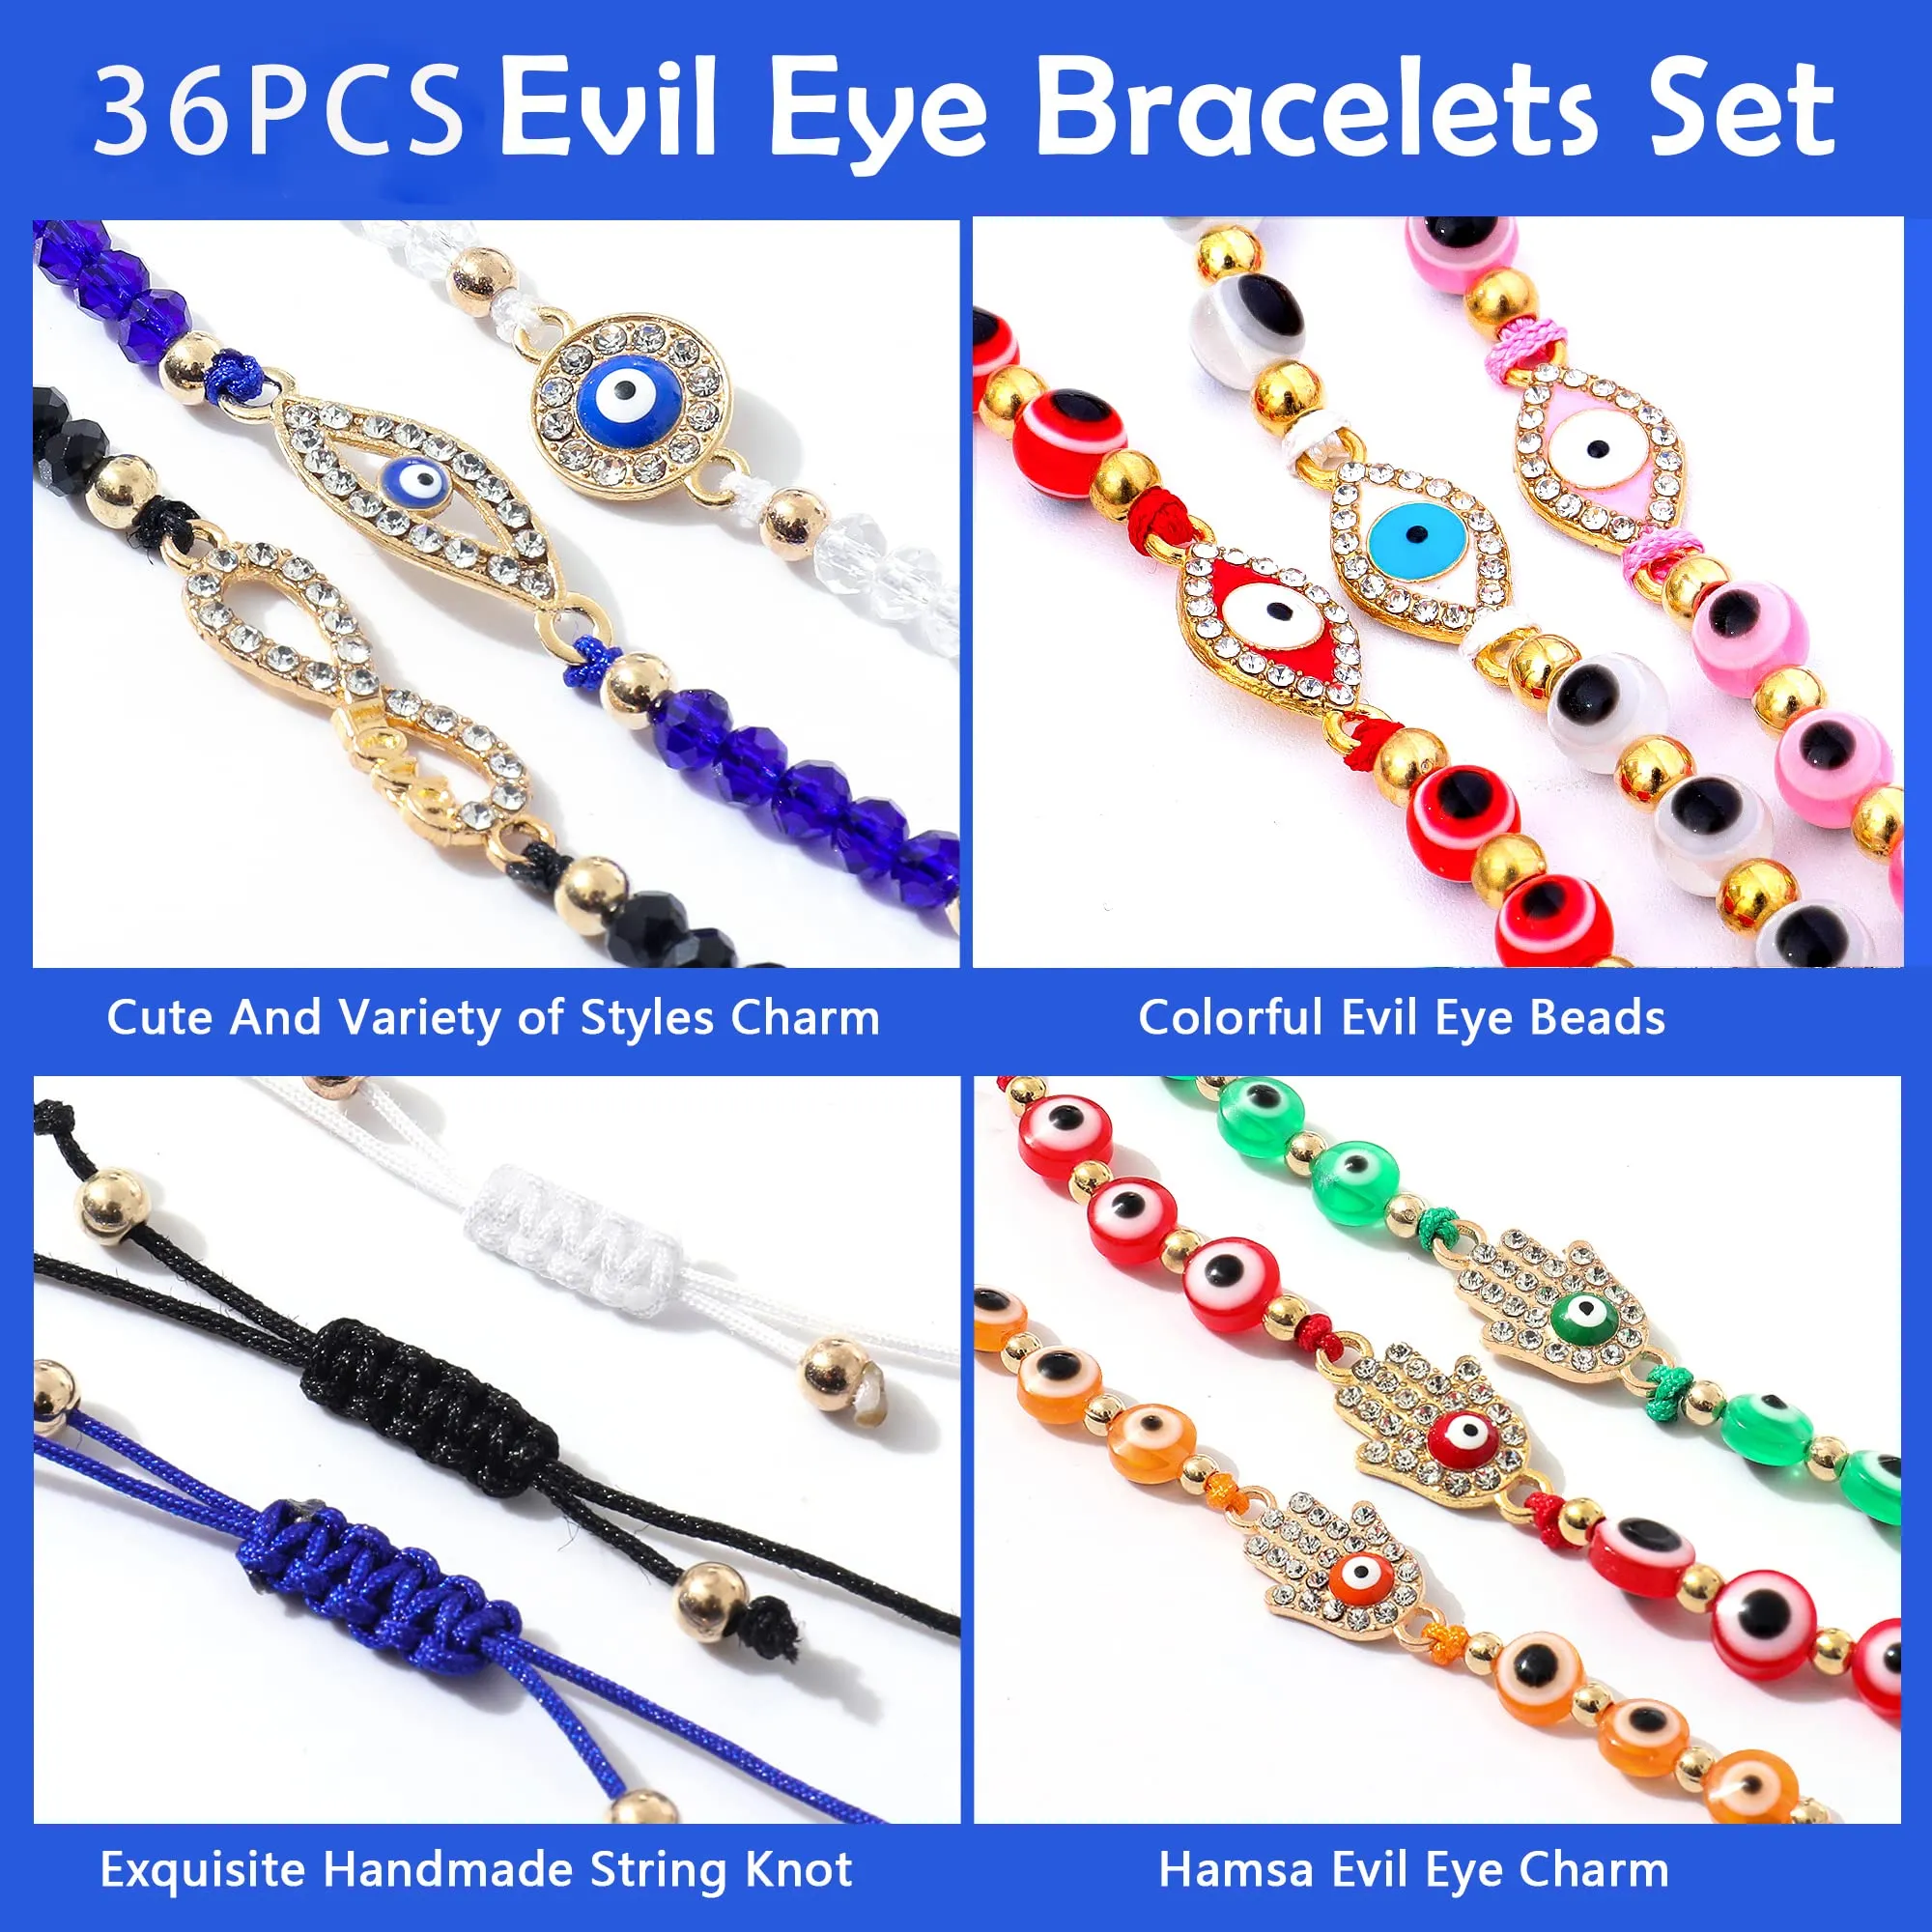 36/ evil eye bracelets pack mexican braclets set ojo bracelet protection amulet anklets jewelry gift for women girls boys